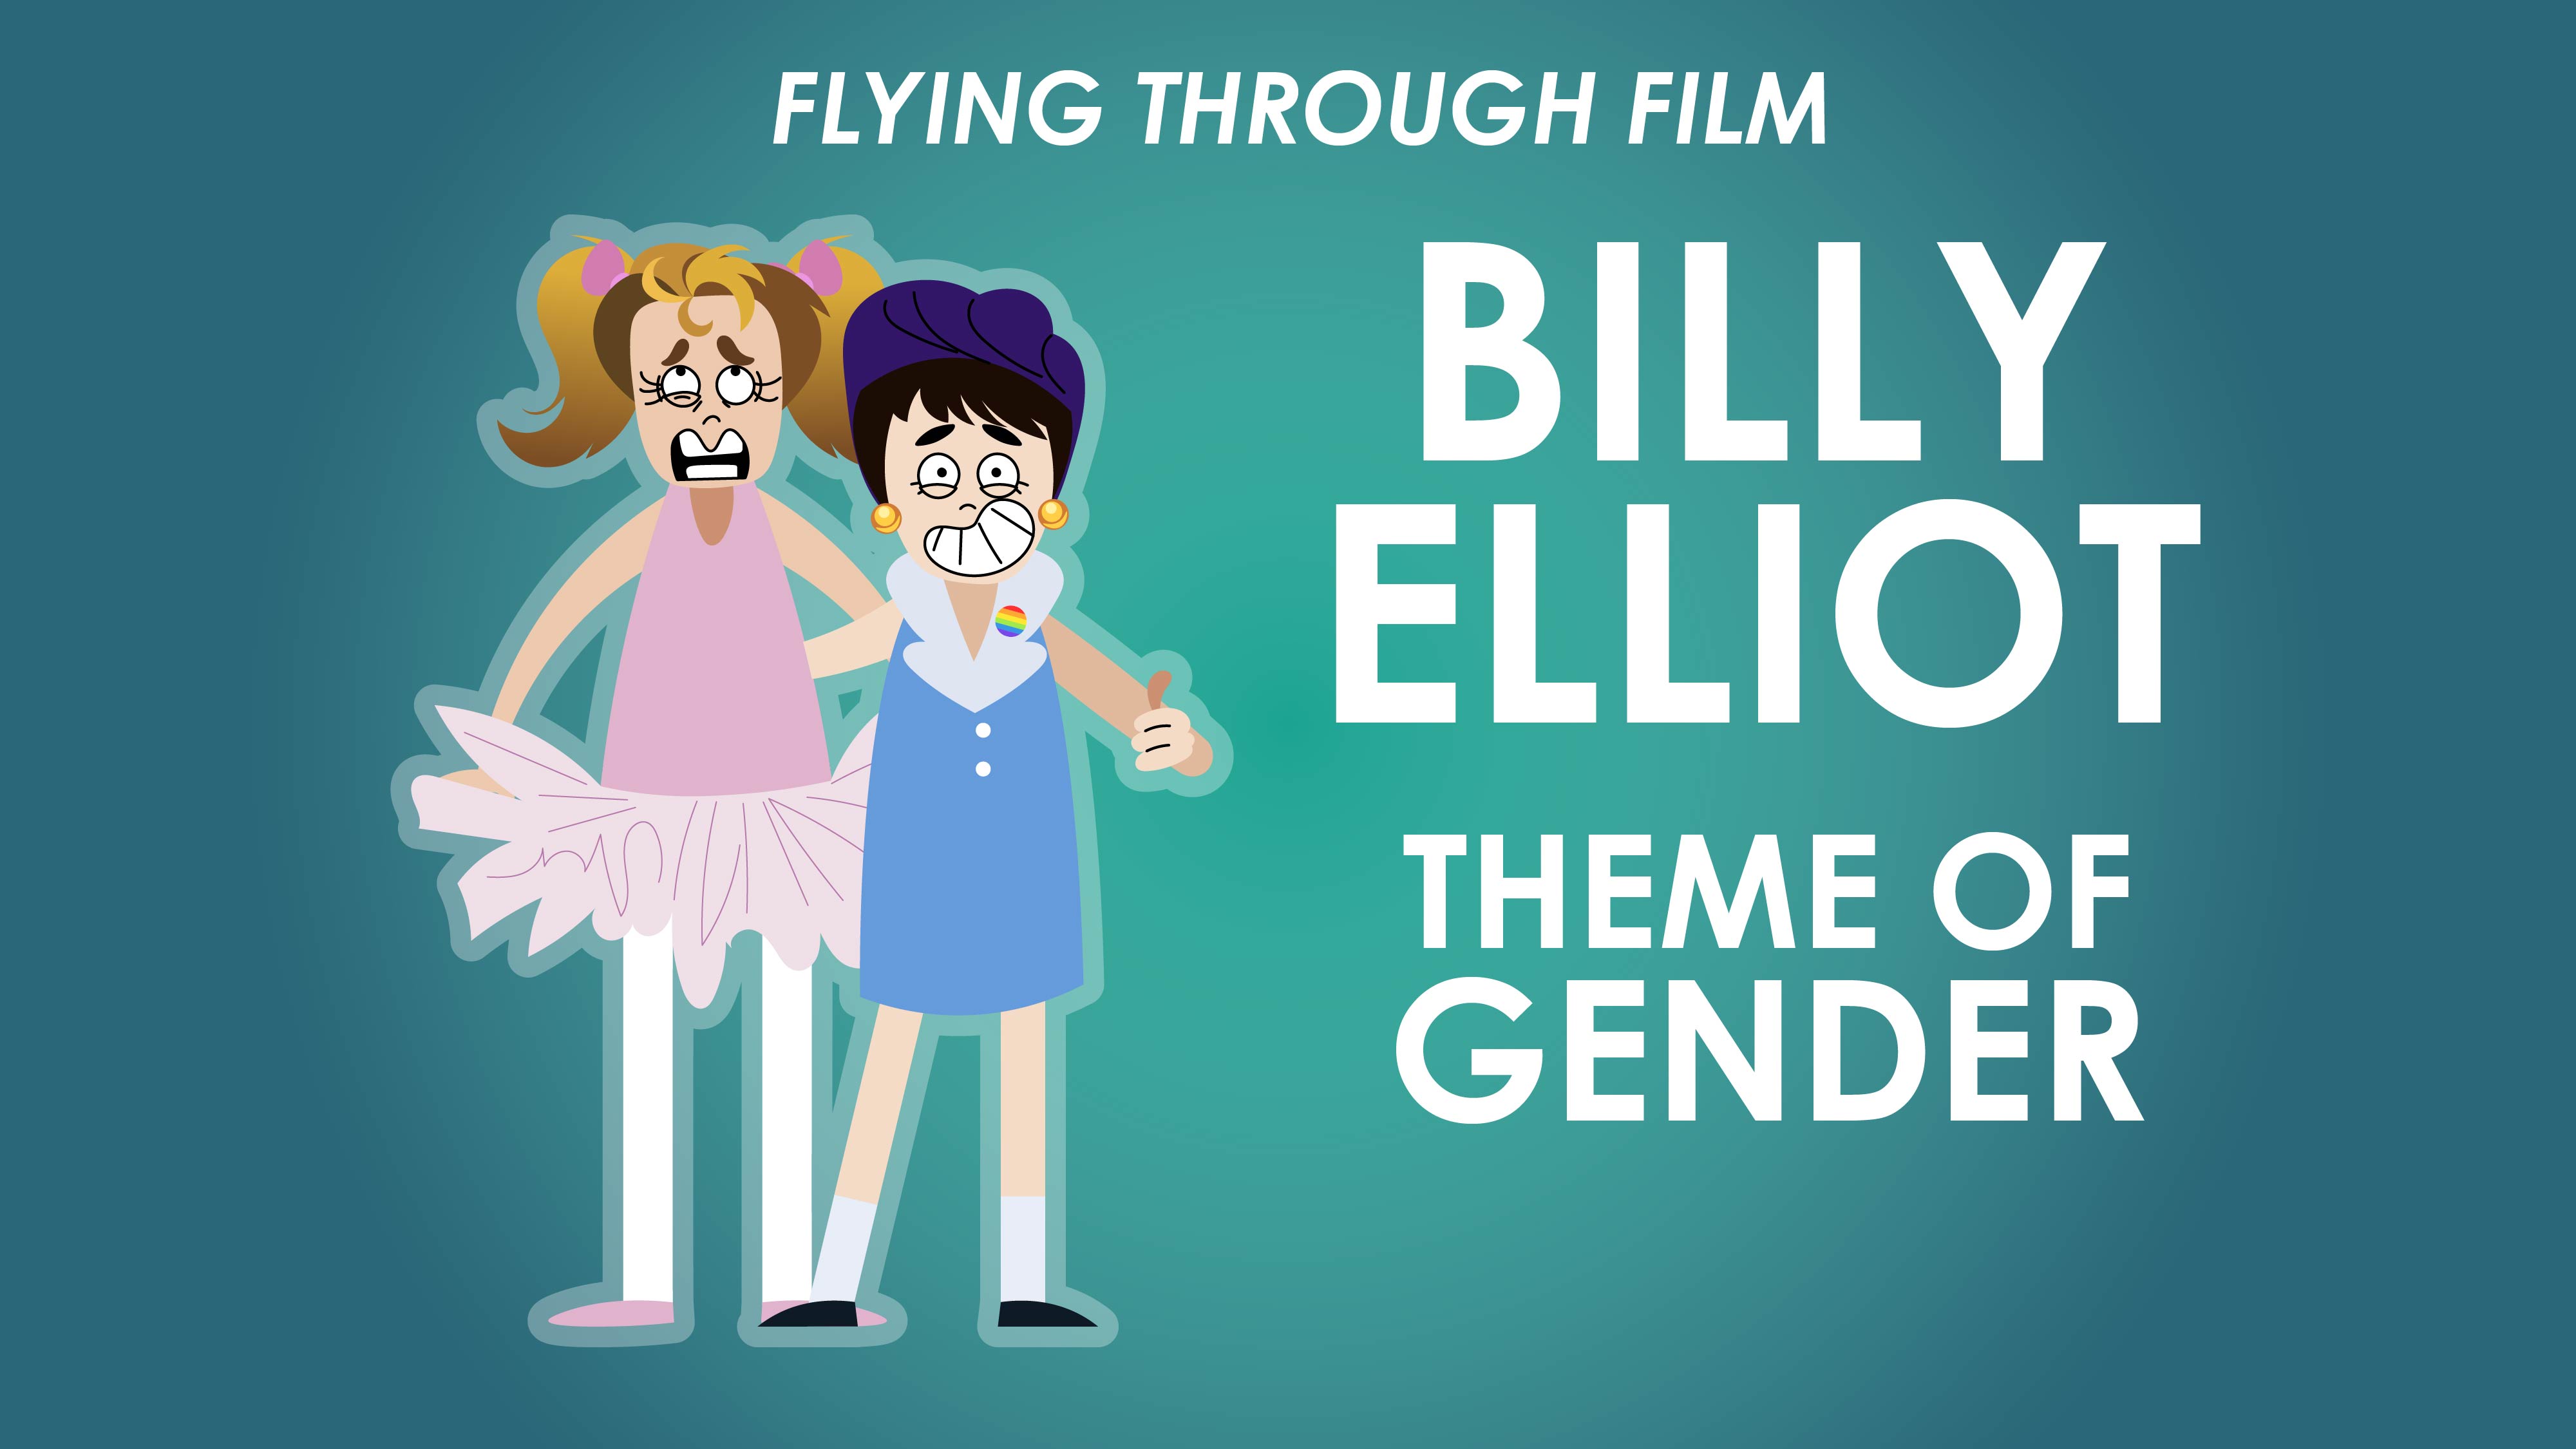 Billy Elliot - Theme Of Gender - Flying Through Film Series